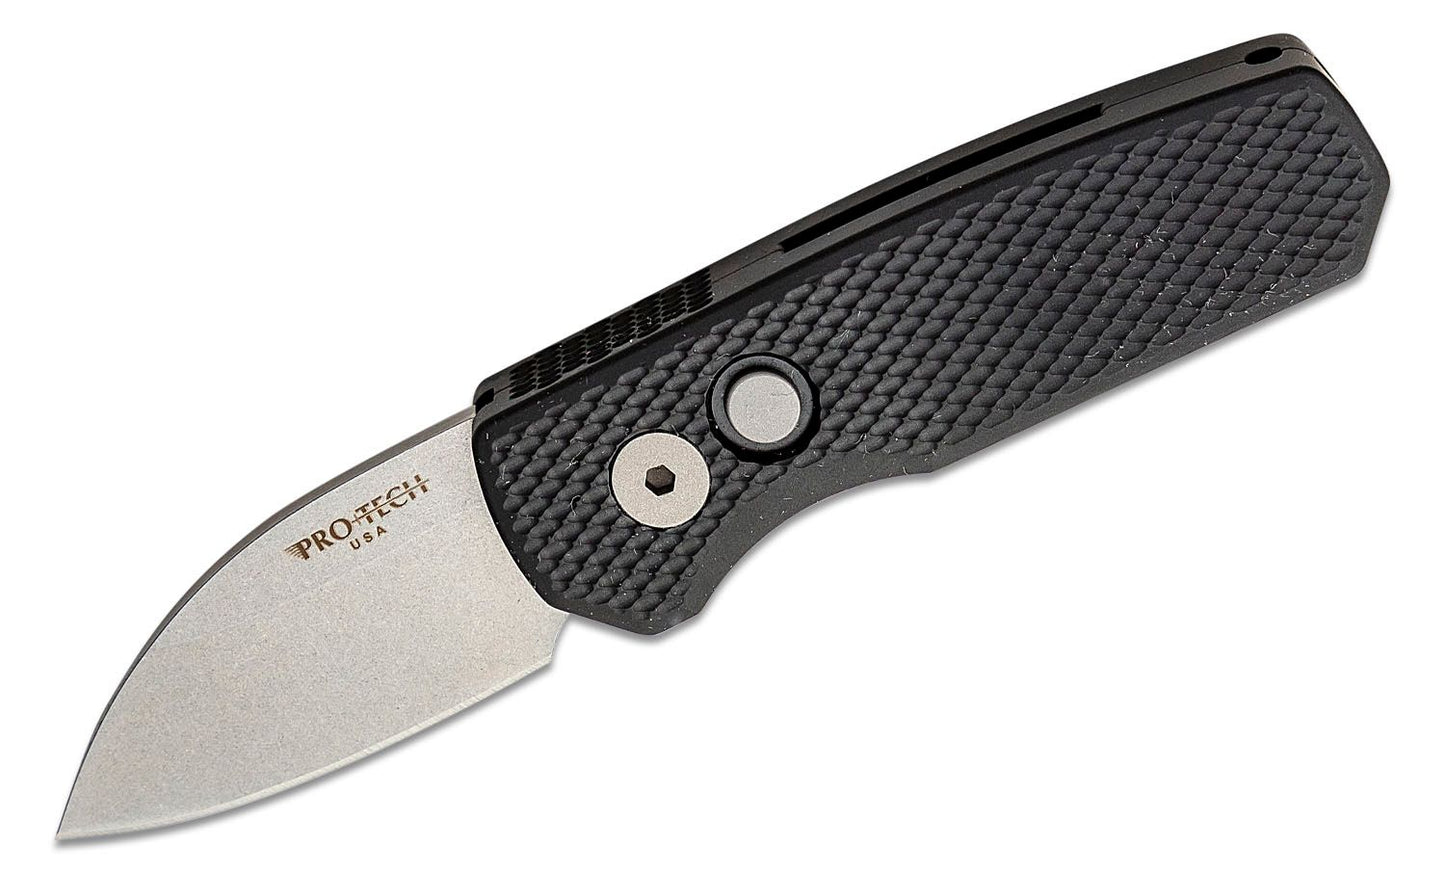 R5305 Runt 5 AUTO Folding Knife 1.94" CPM-MagnaCut Stonewashed Wharncliffe Blade, Textured Black Aluminum Handles